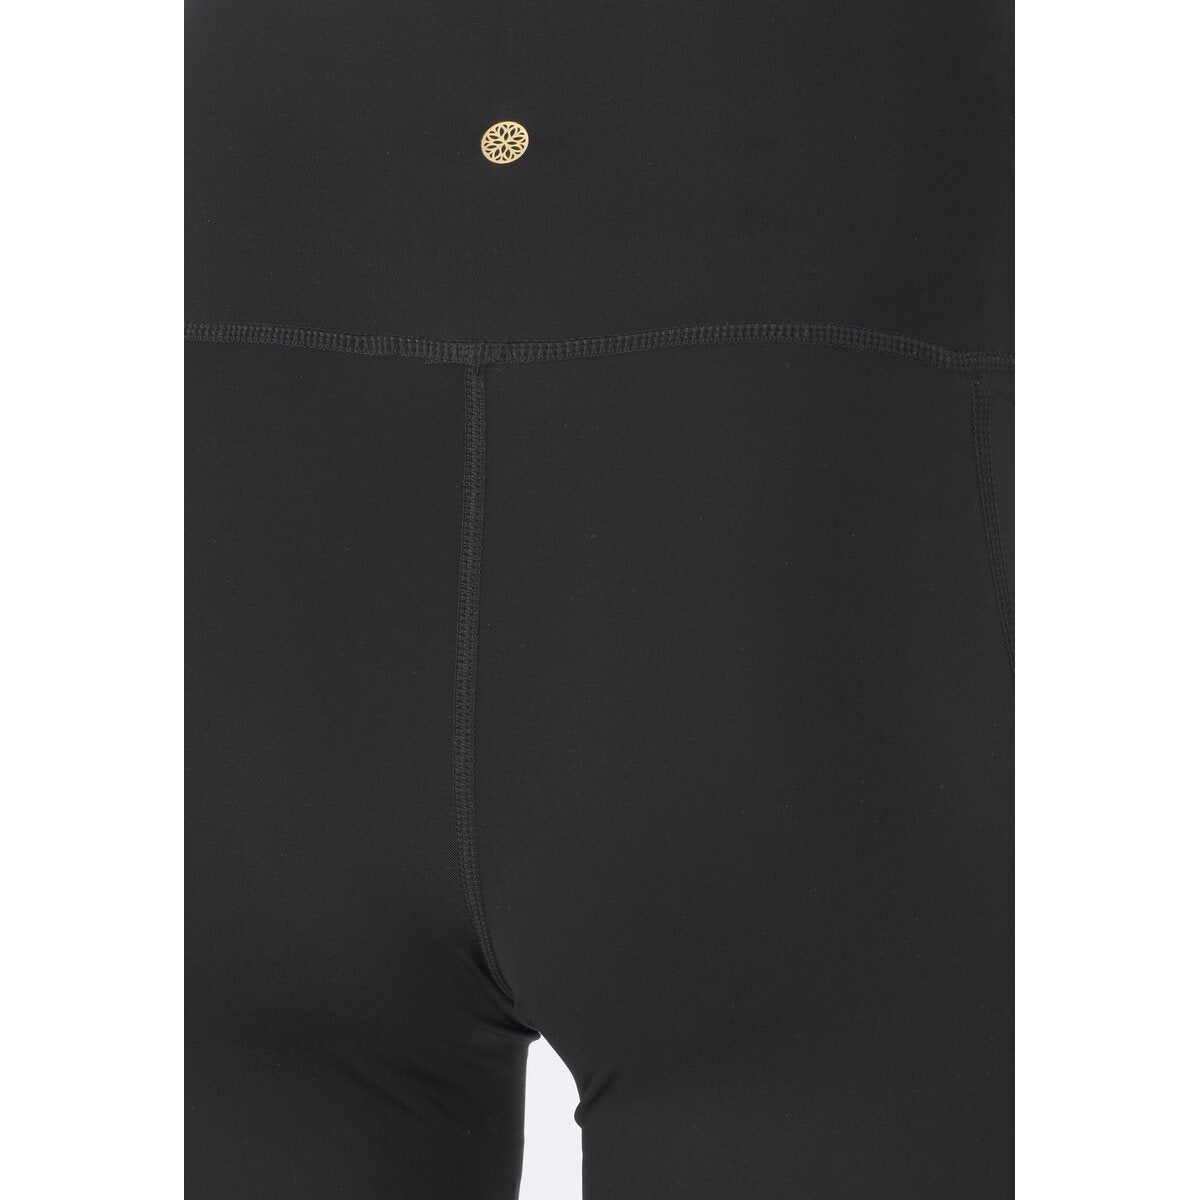 Athlecia Franz Womenswear Pocket Tights - Black 4 Shaws Department Stores